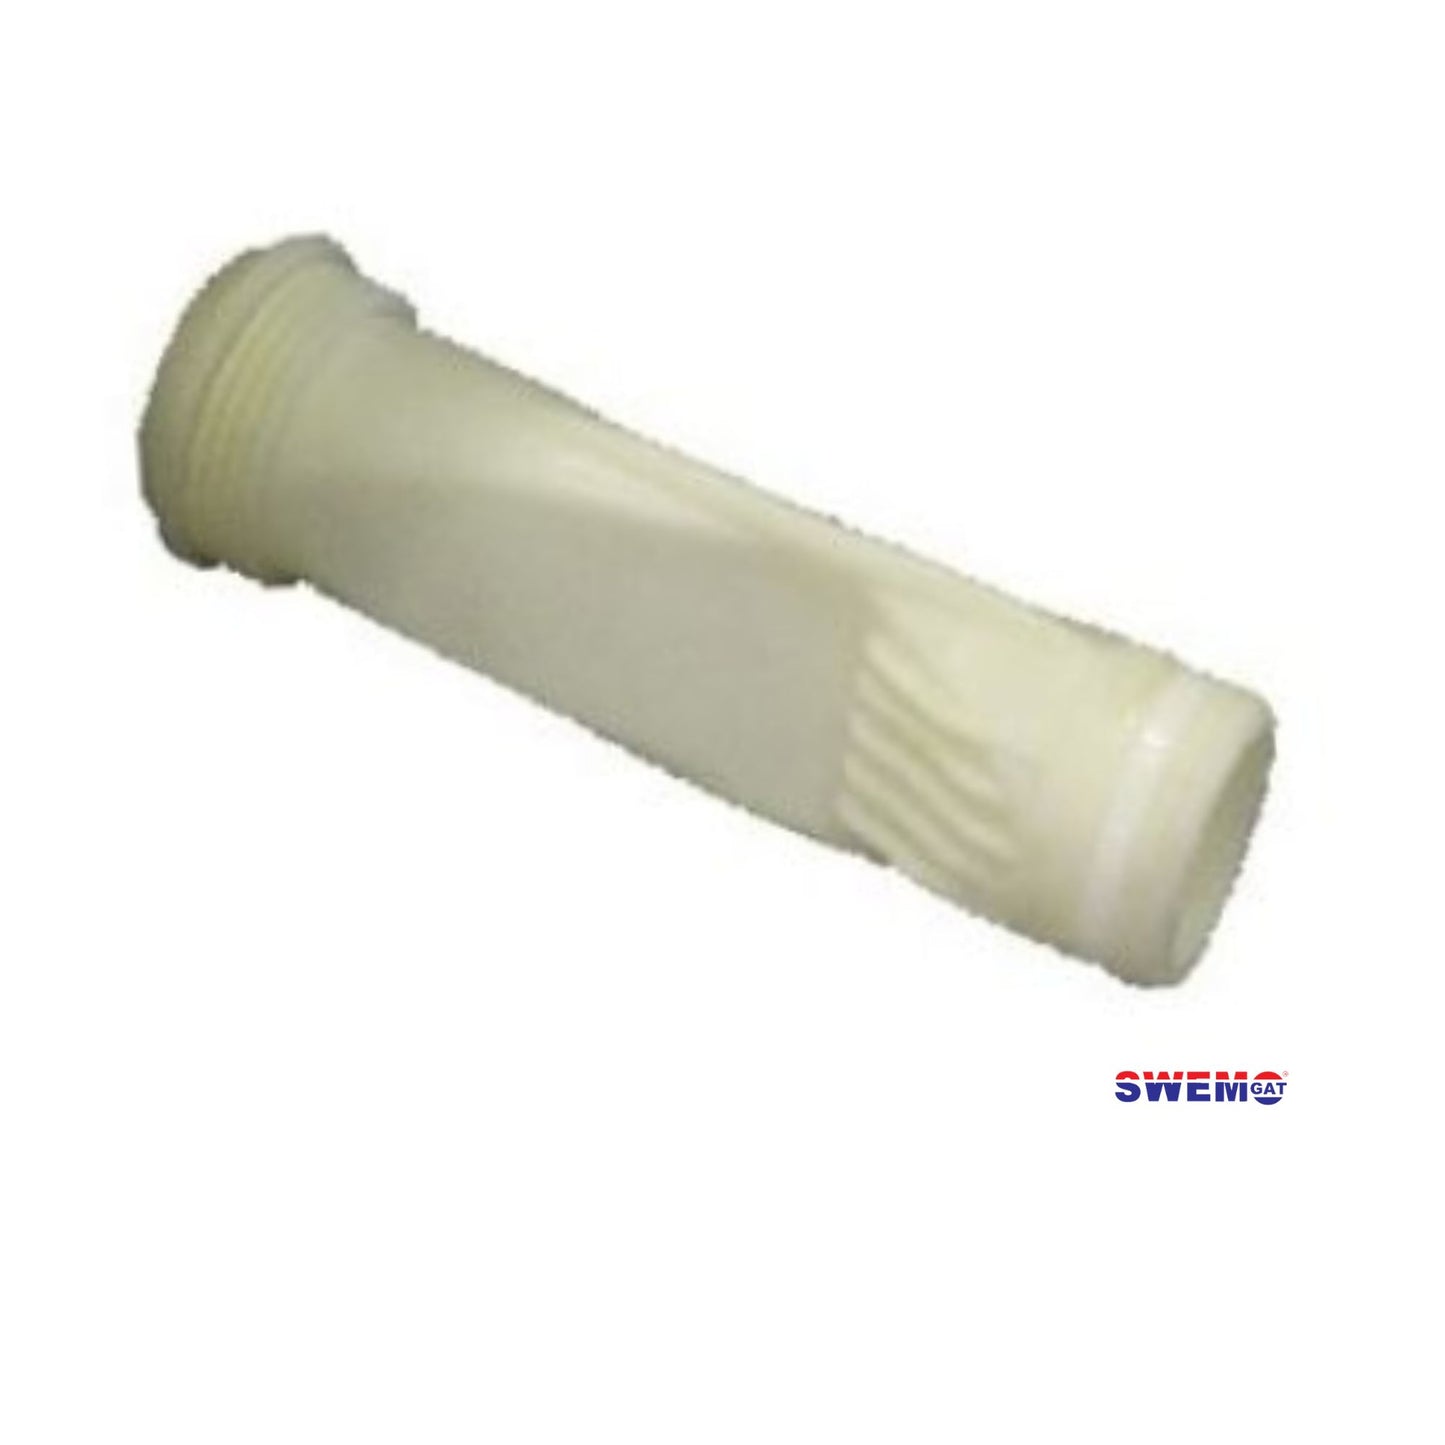 Sweepa Diaphragm round (casette diaphragm) | Compatible with G2; Genius; Aquasphere